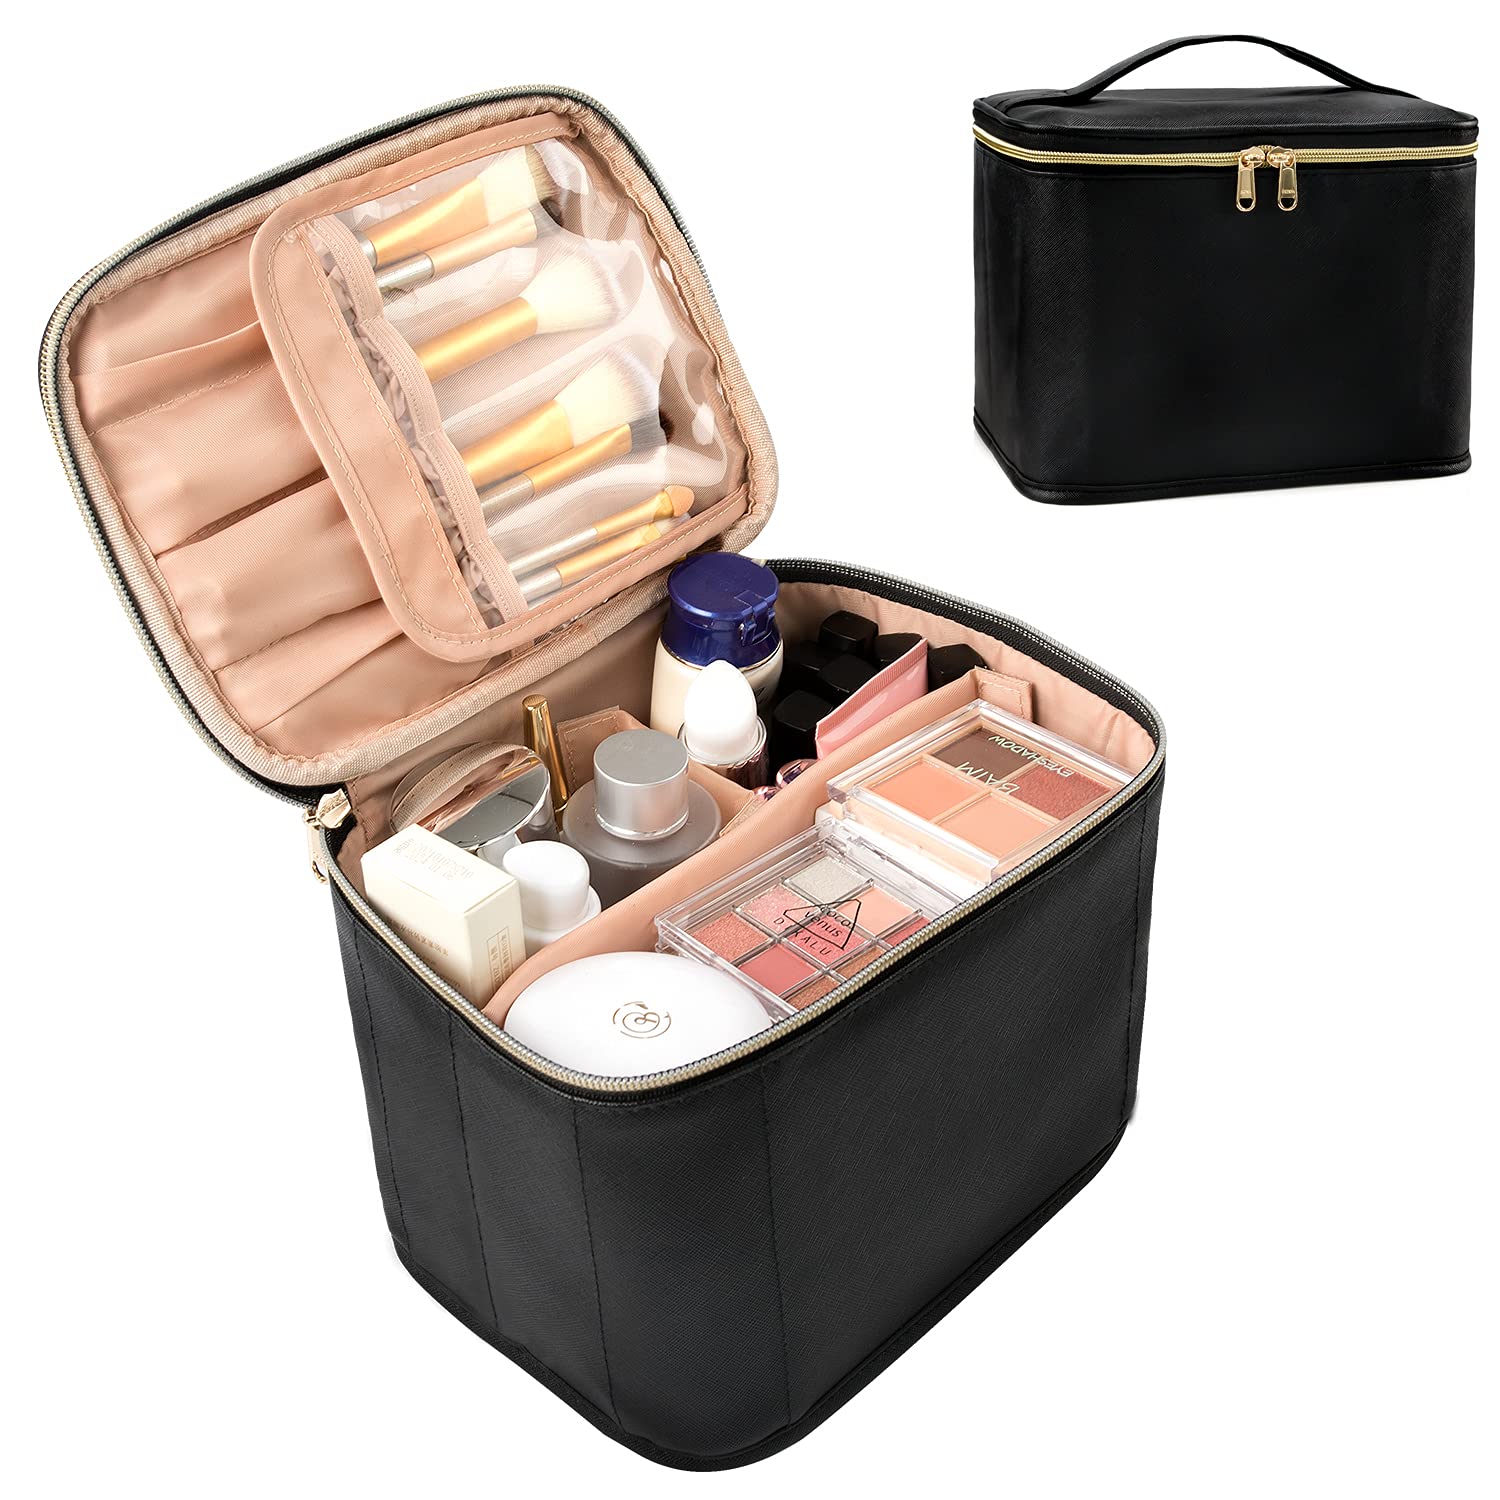  BOBOBOX Travel Cosmetic Bag Large Capacity Make Up Bag